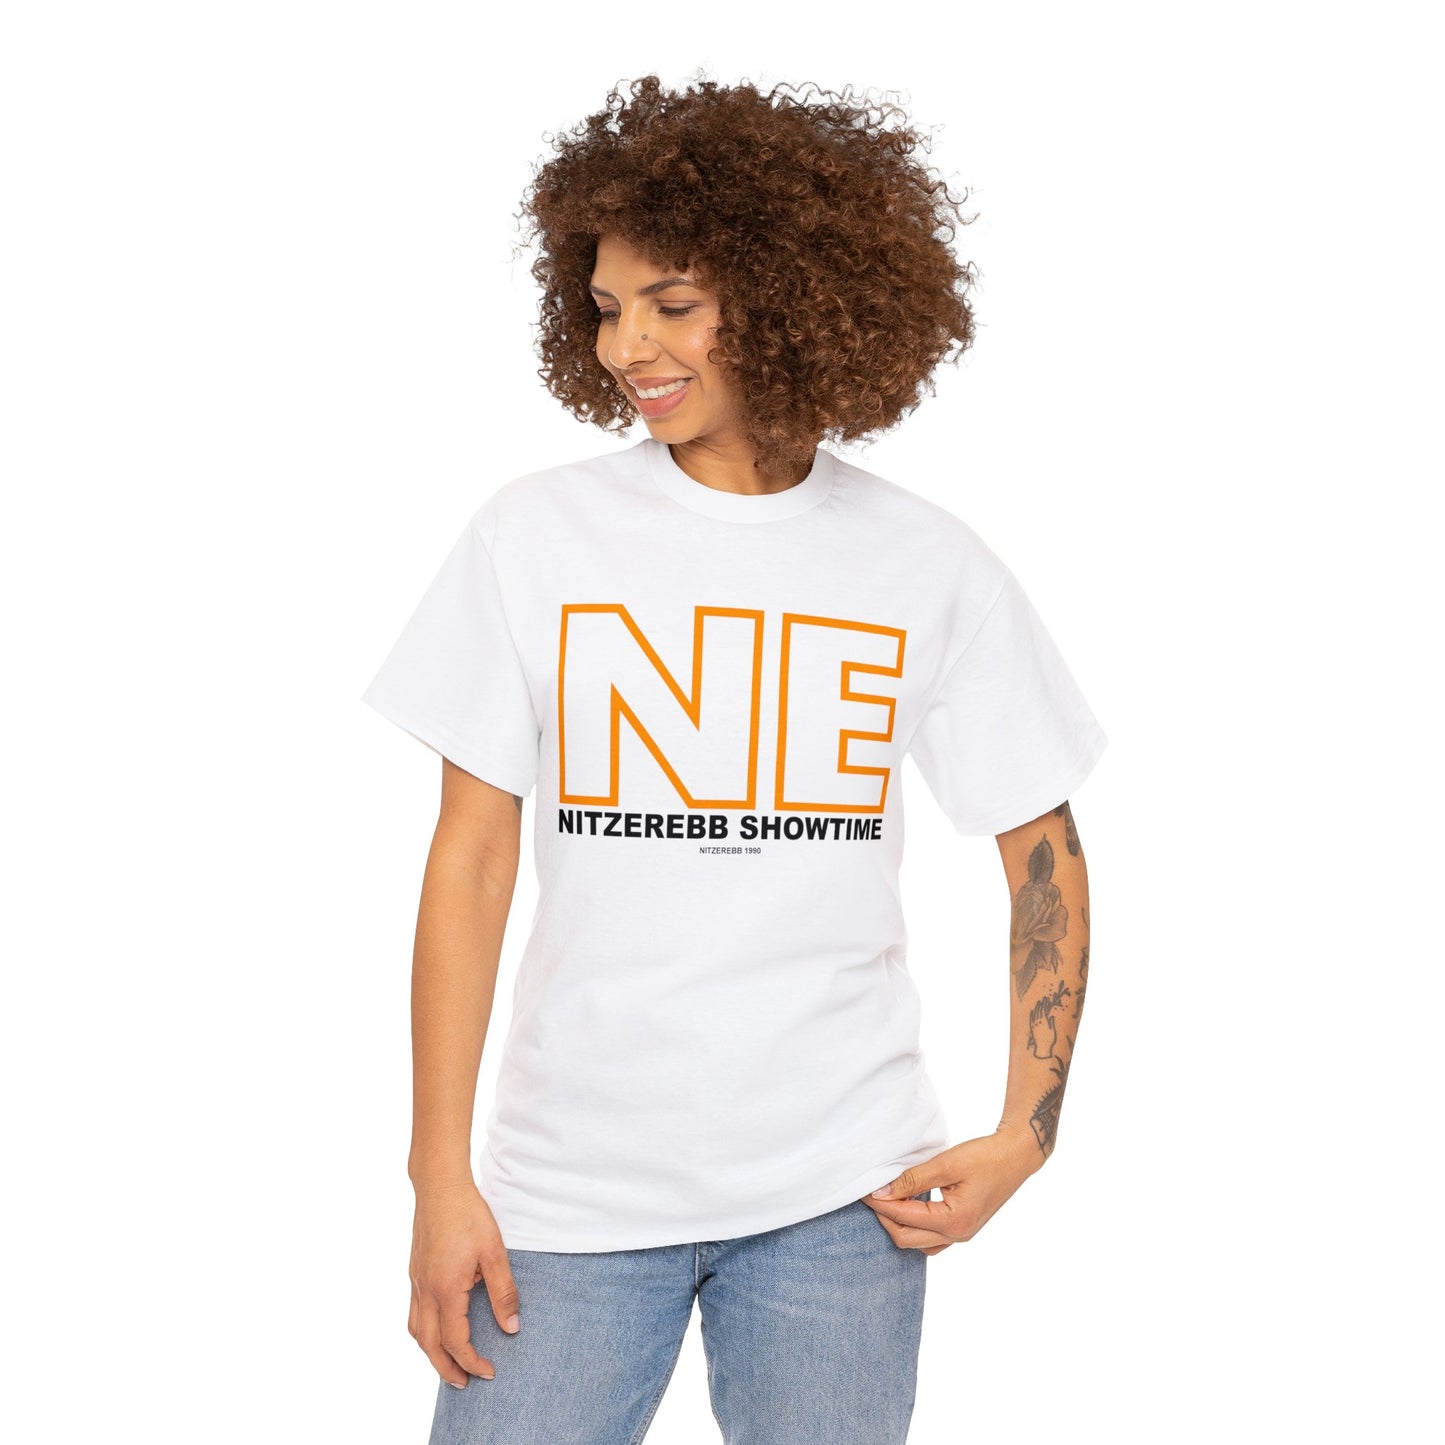 NE NITZEREBB SHOWTIME 1990 T-shirt for Sale